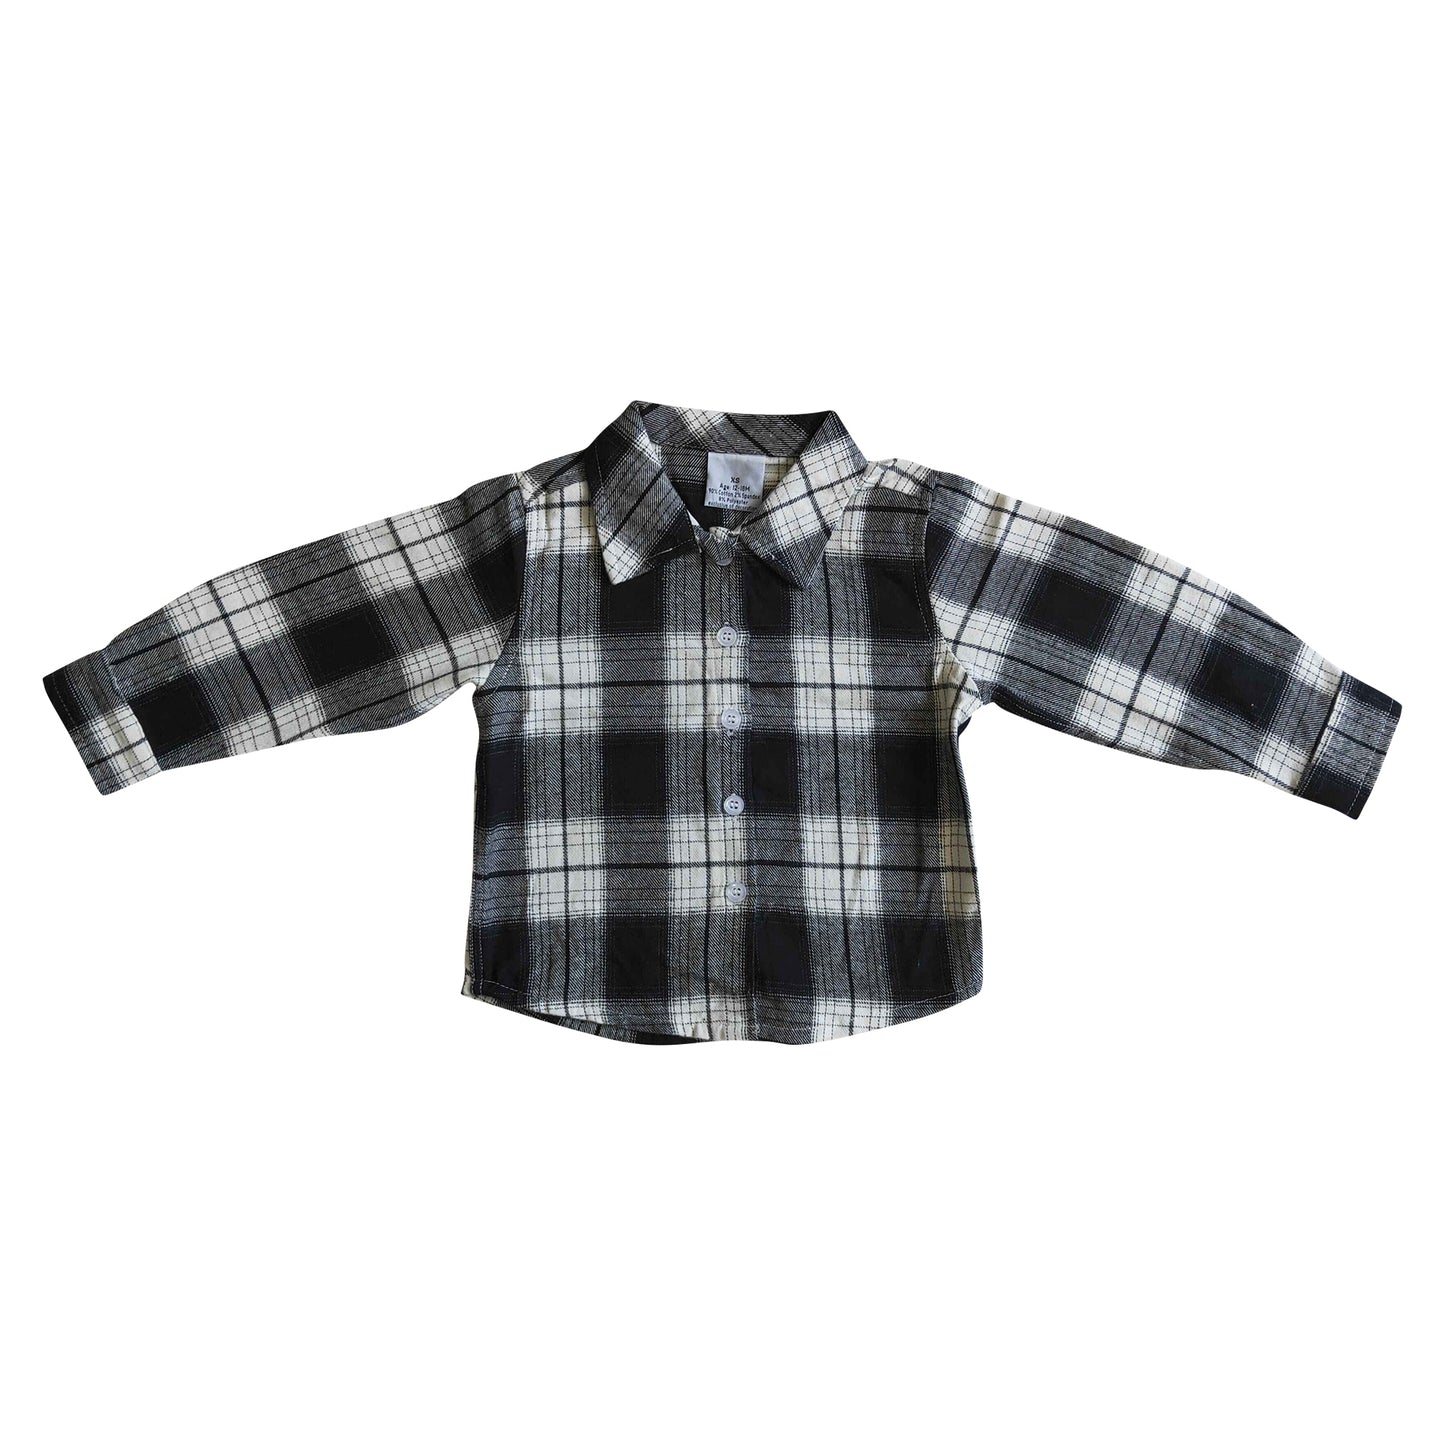 children's clothing boy flannel black white plaid button shirt for winter